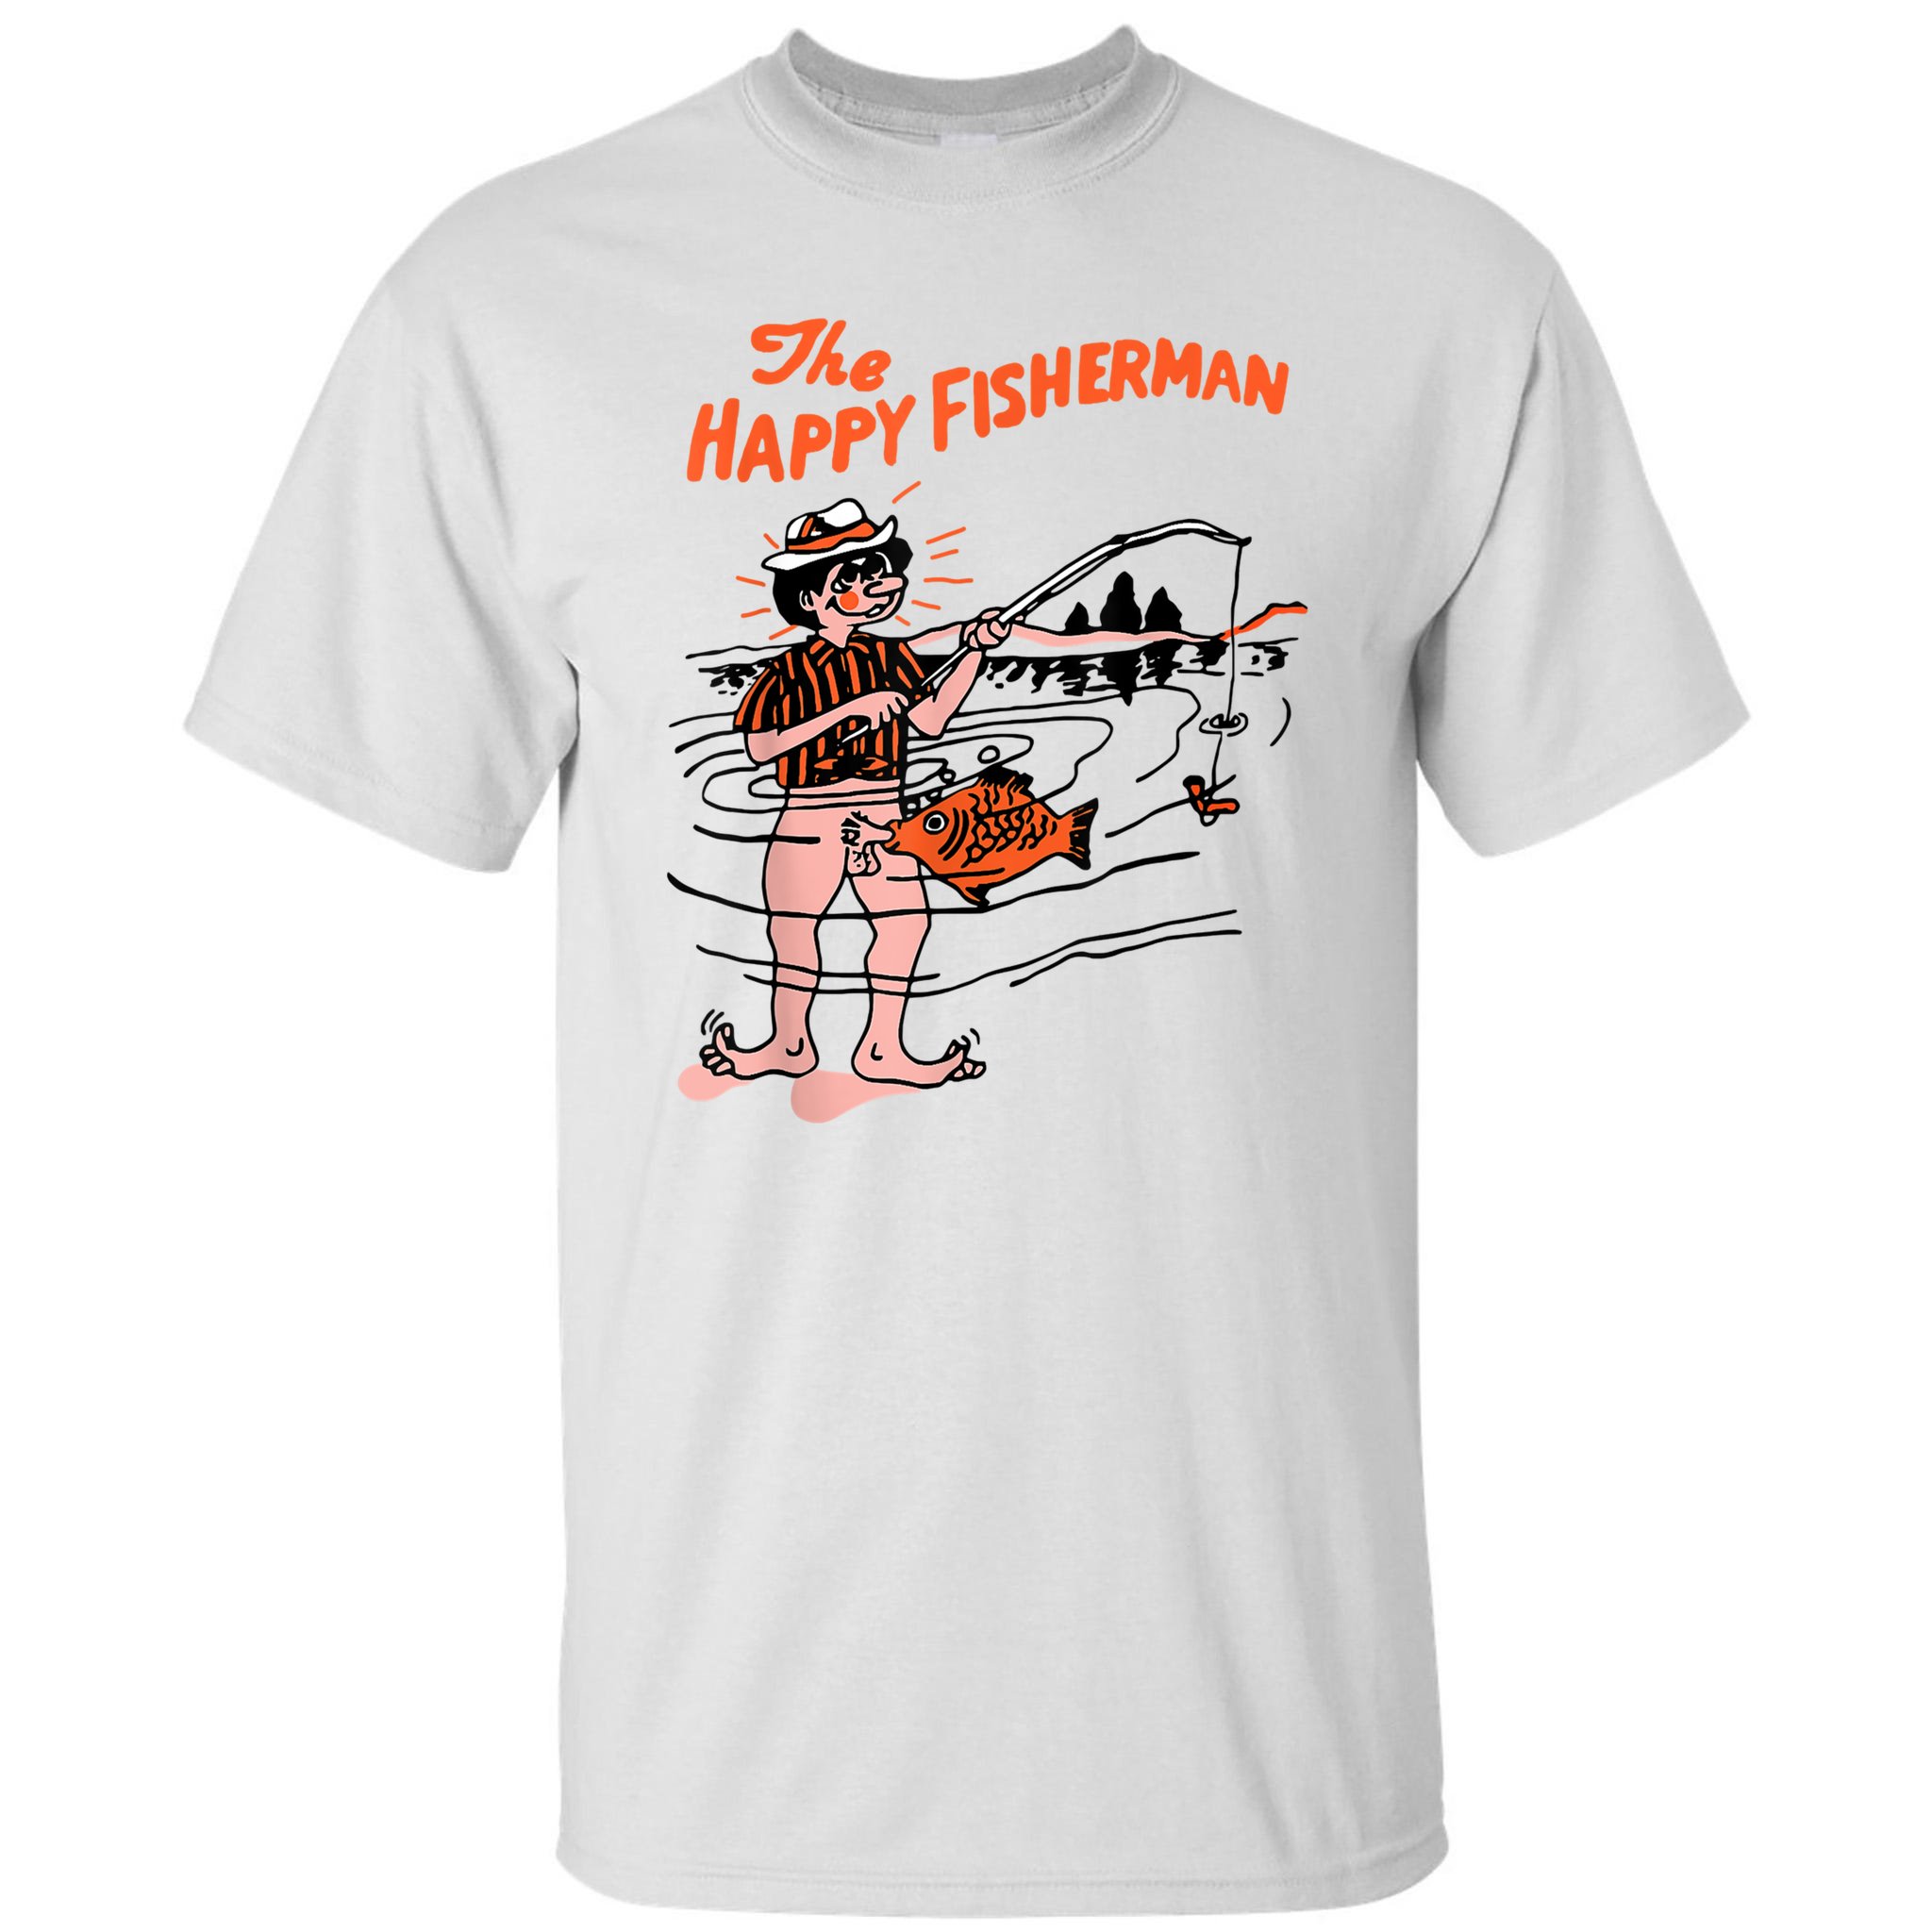 Fish Island T Shirt, Fisherman Shirts, Funny Fishing Graphic Tees, Gif –  The Laughter Factory